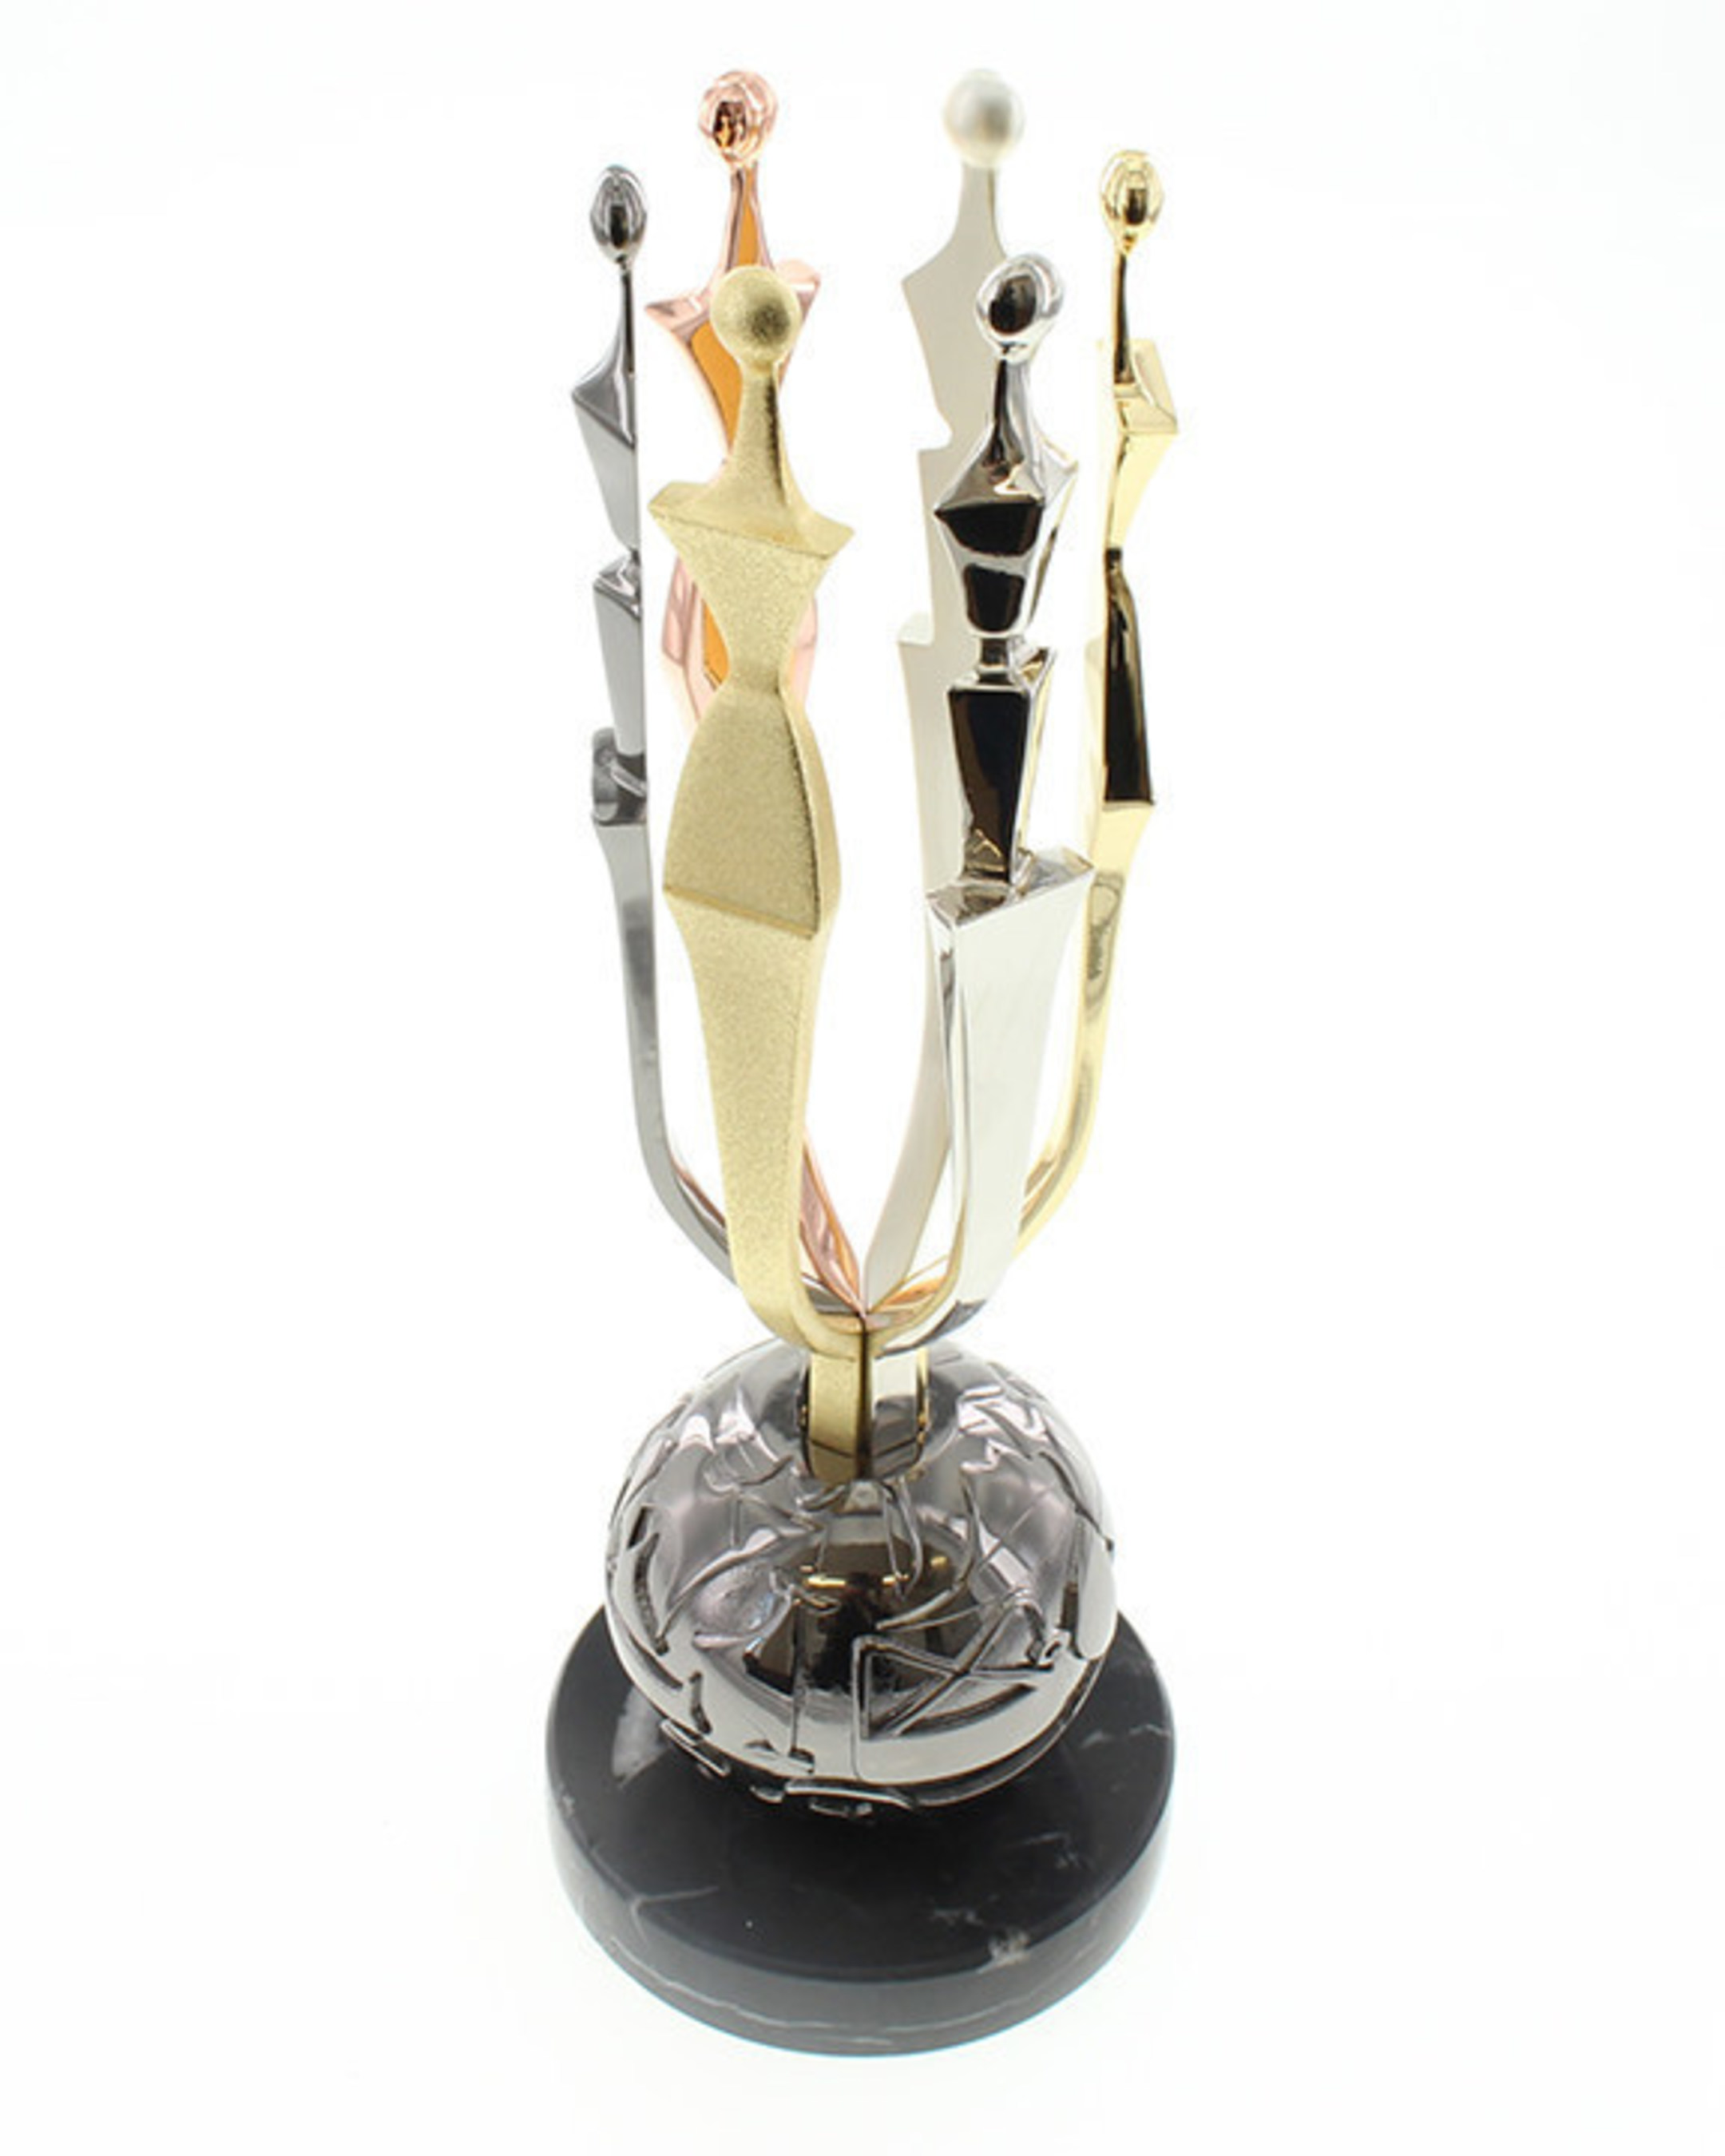 The new AAFA American Image Awards statuette designed by world-renowned Artist Ruben Toledo.